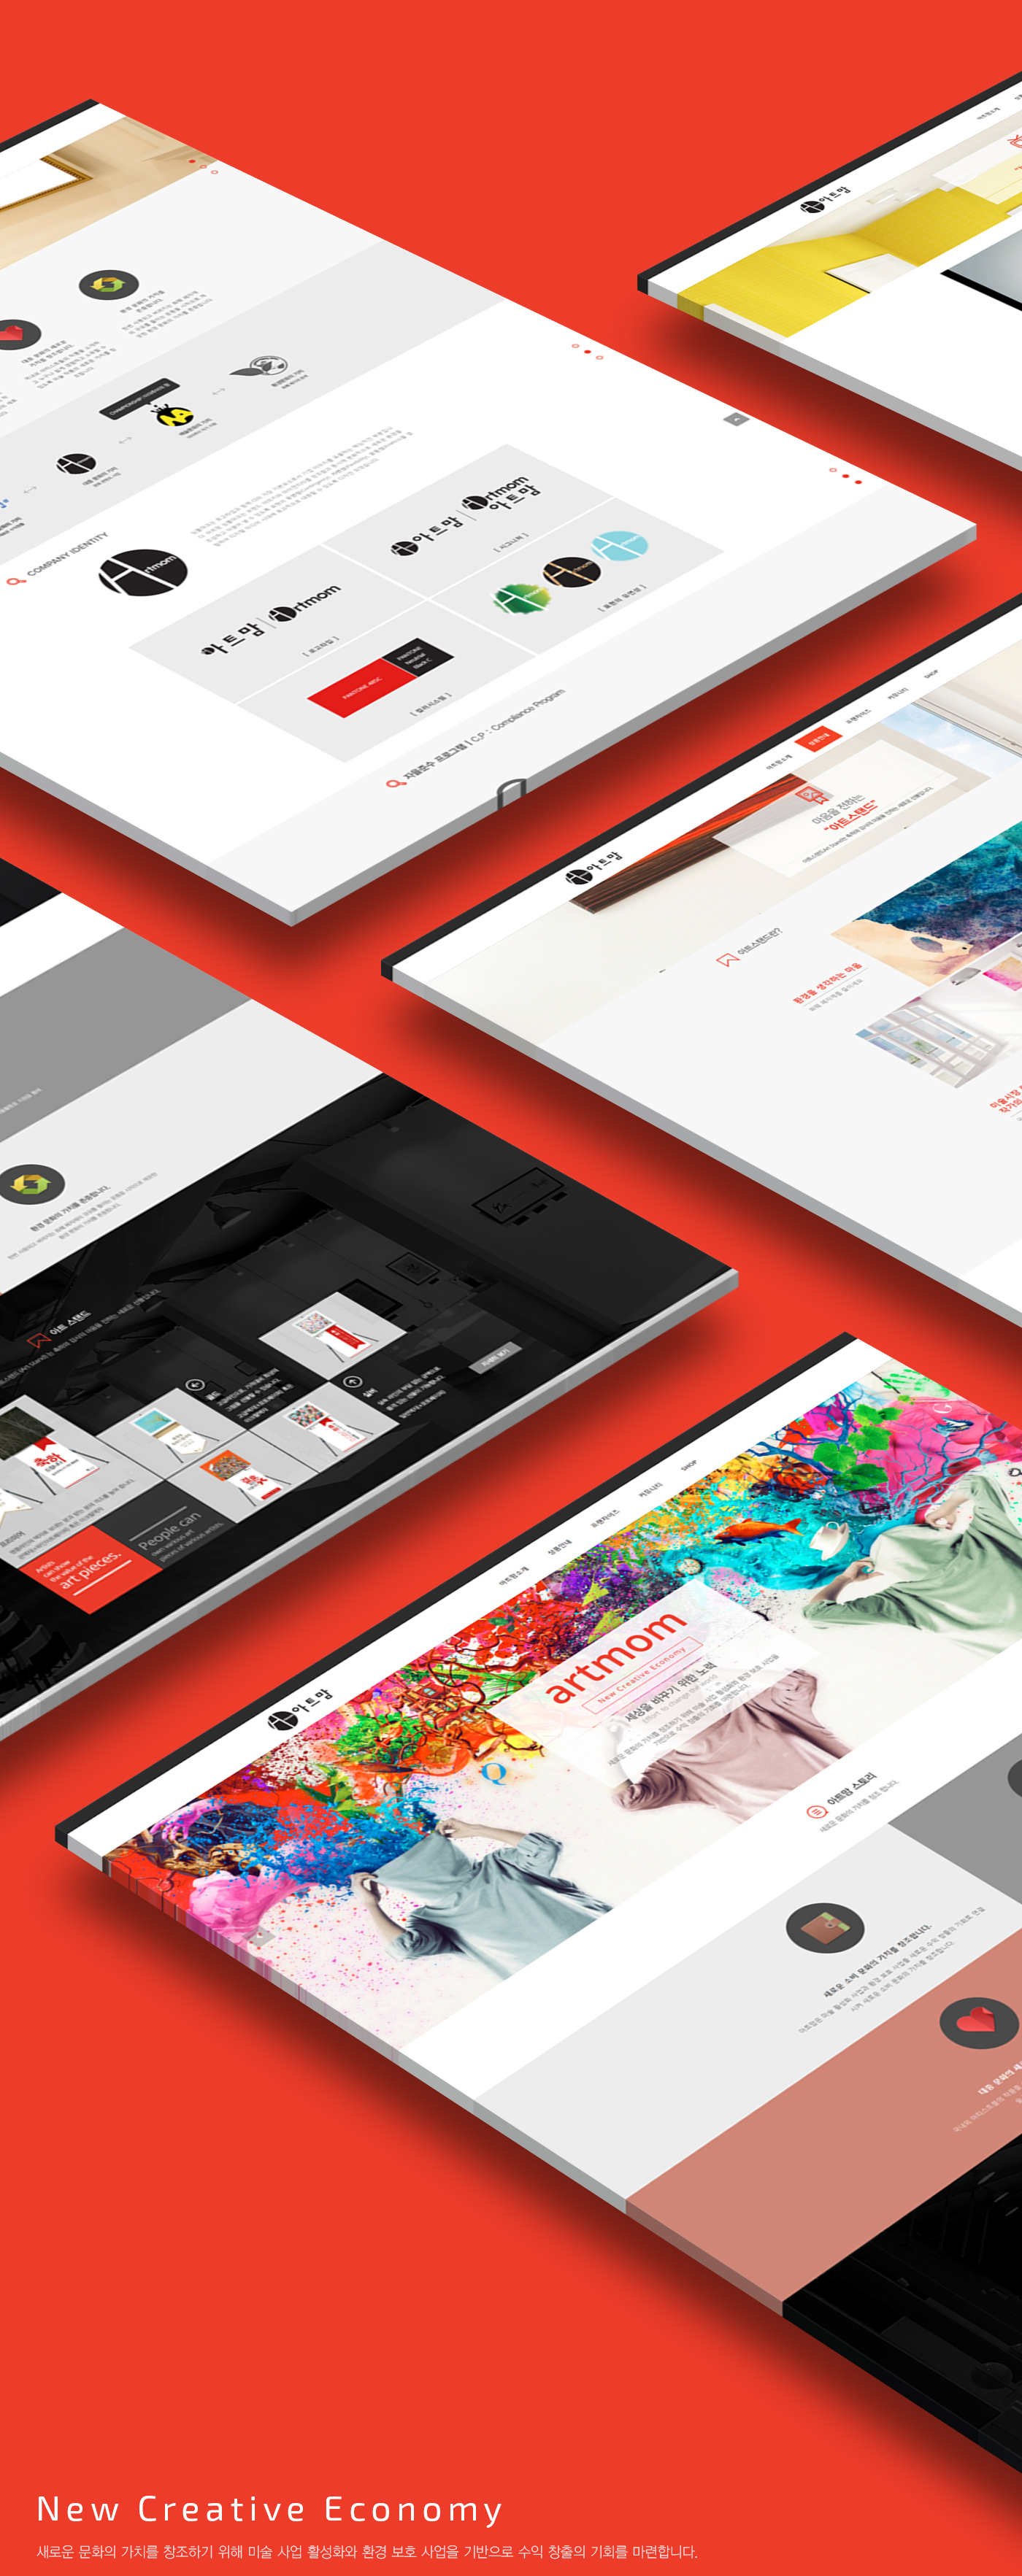 Webdesign web develop artmom artist Website Design red musign